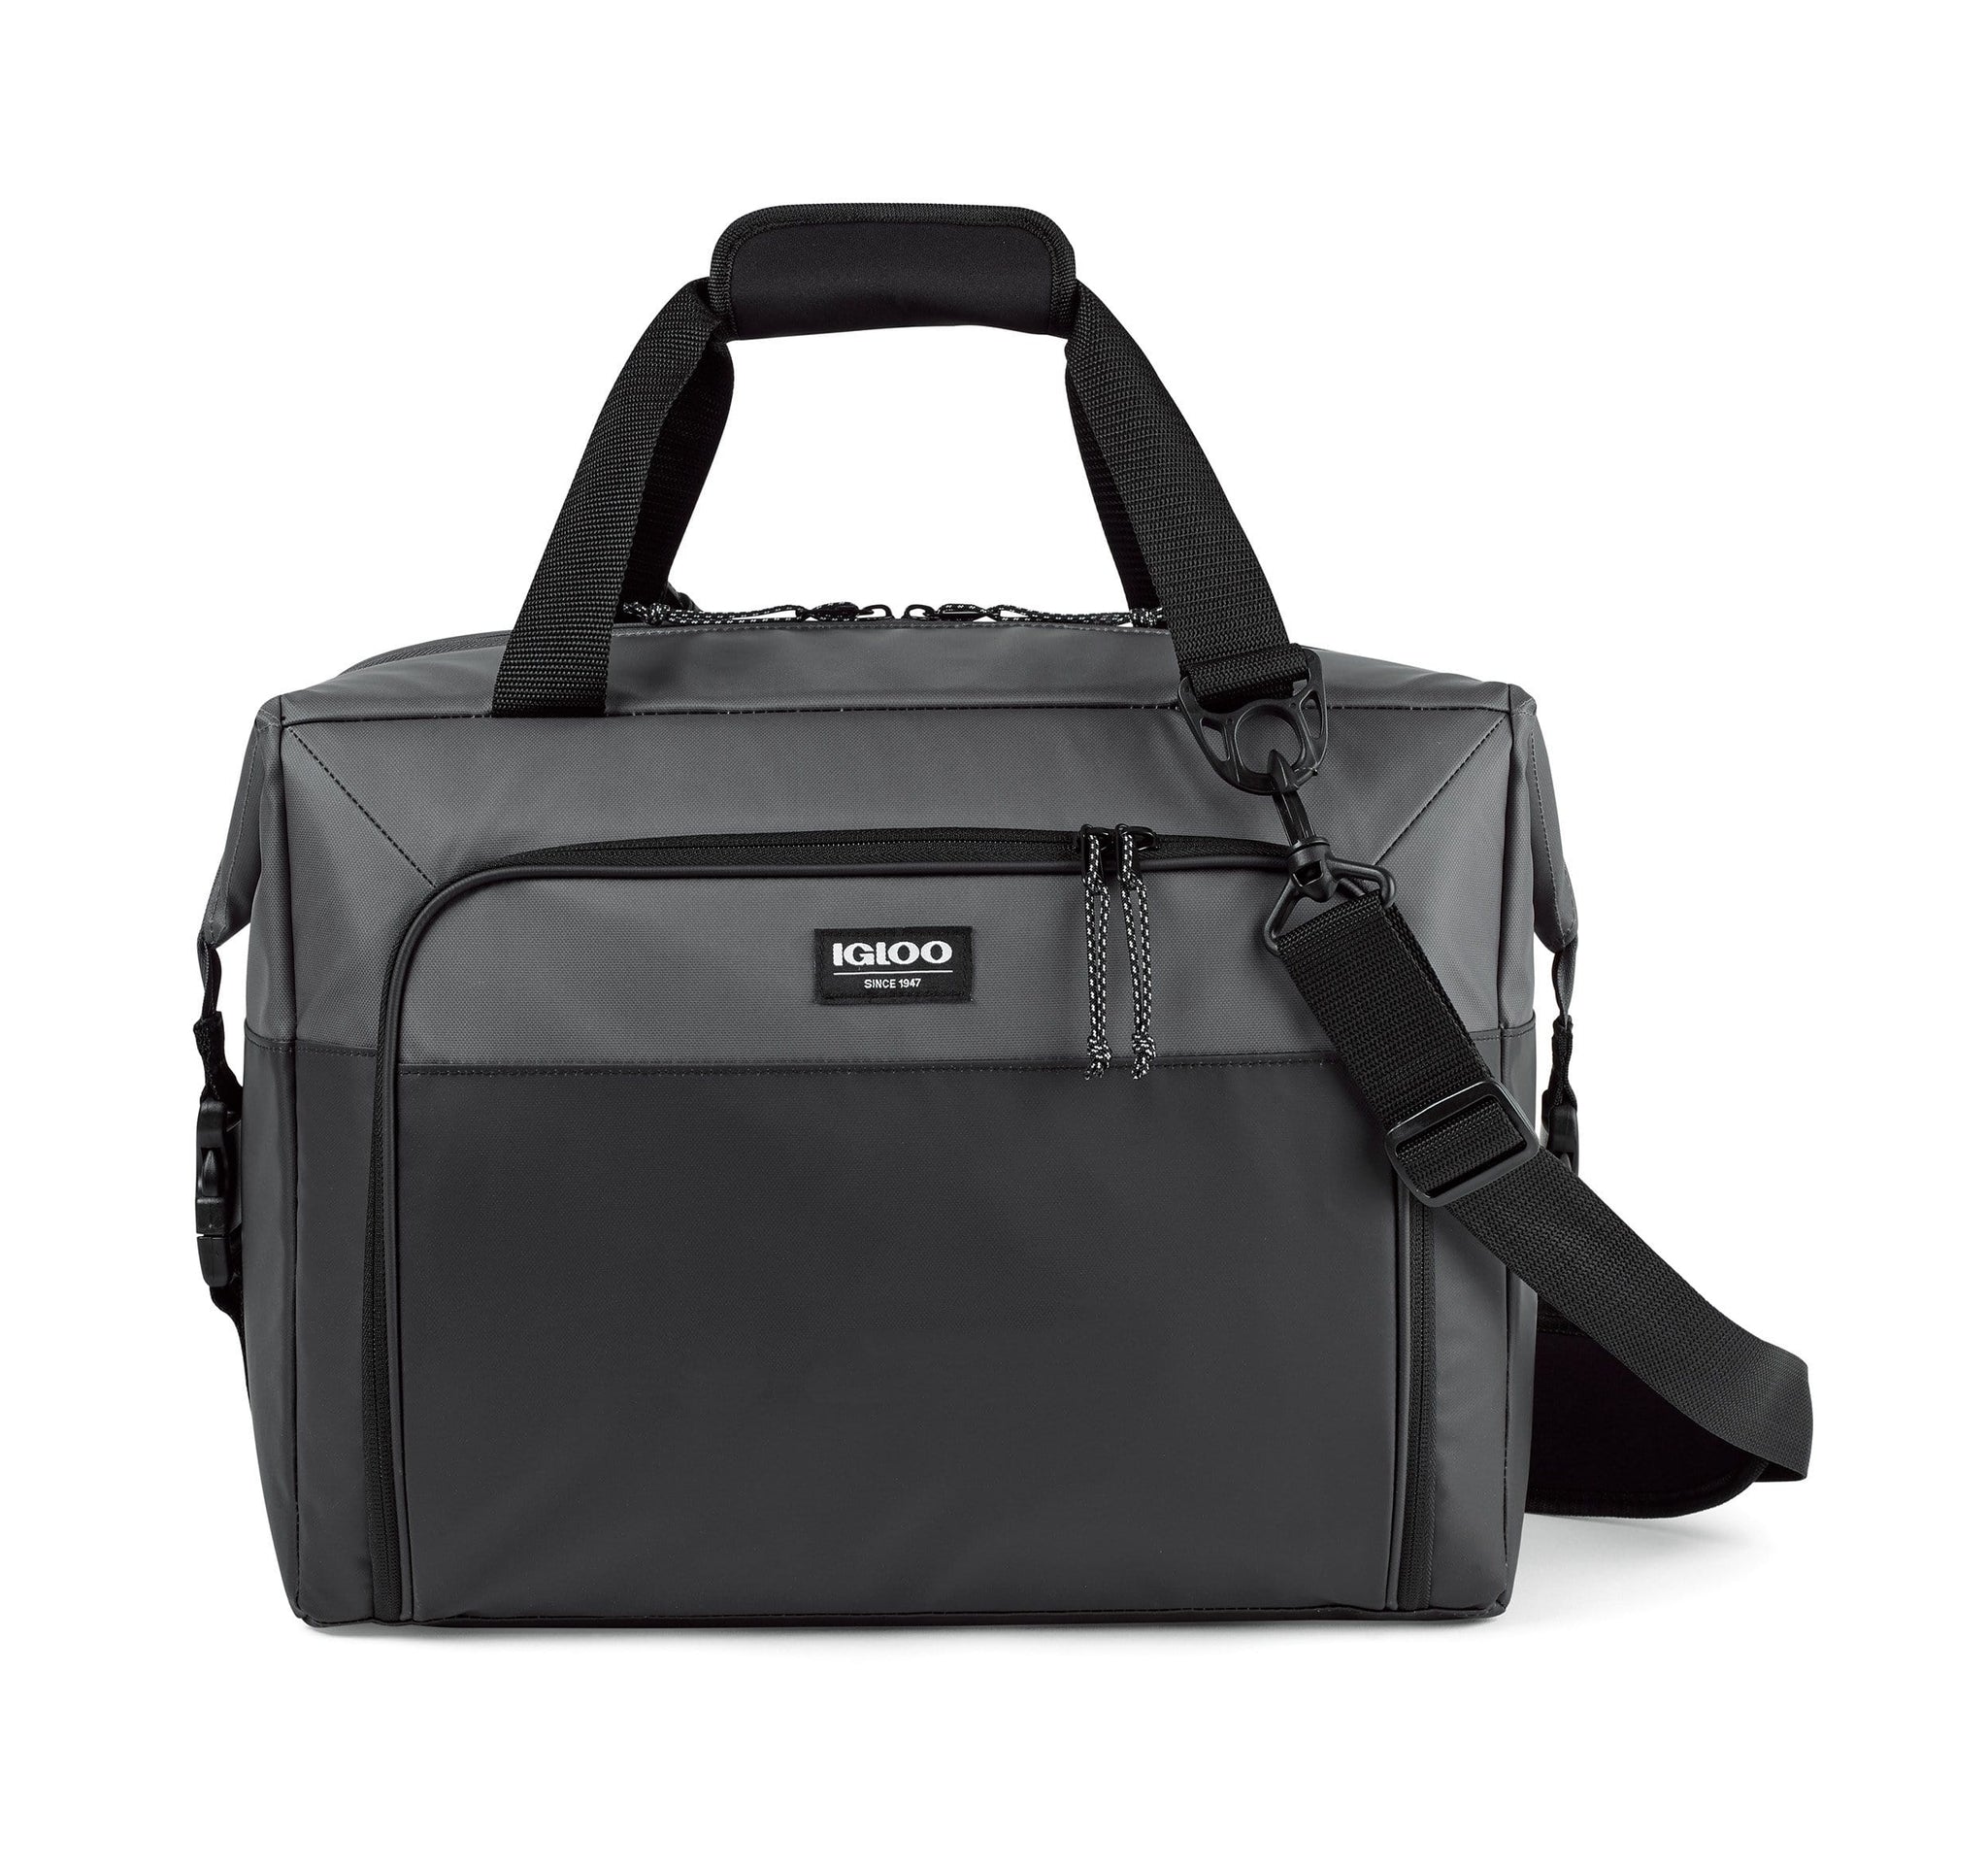 Igloo Bags One Size / Black/Grey Igloo - Seadrift™ Snap Down Cooler